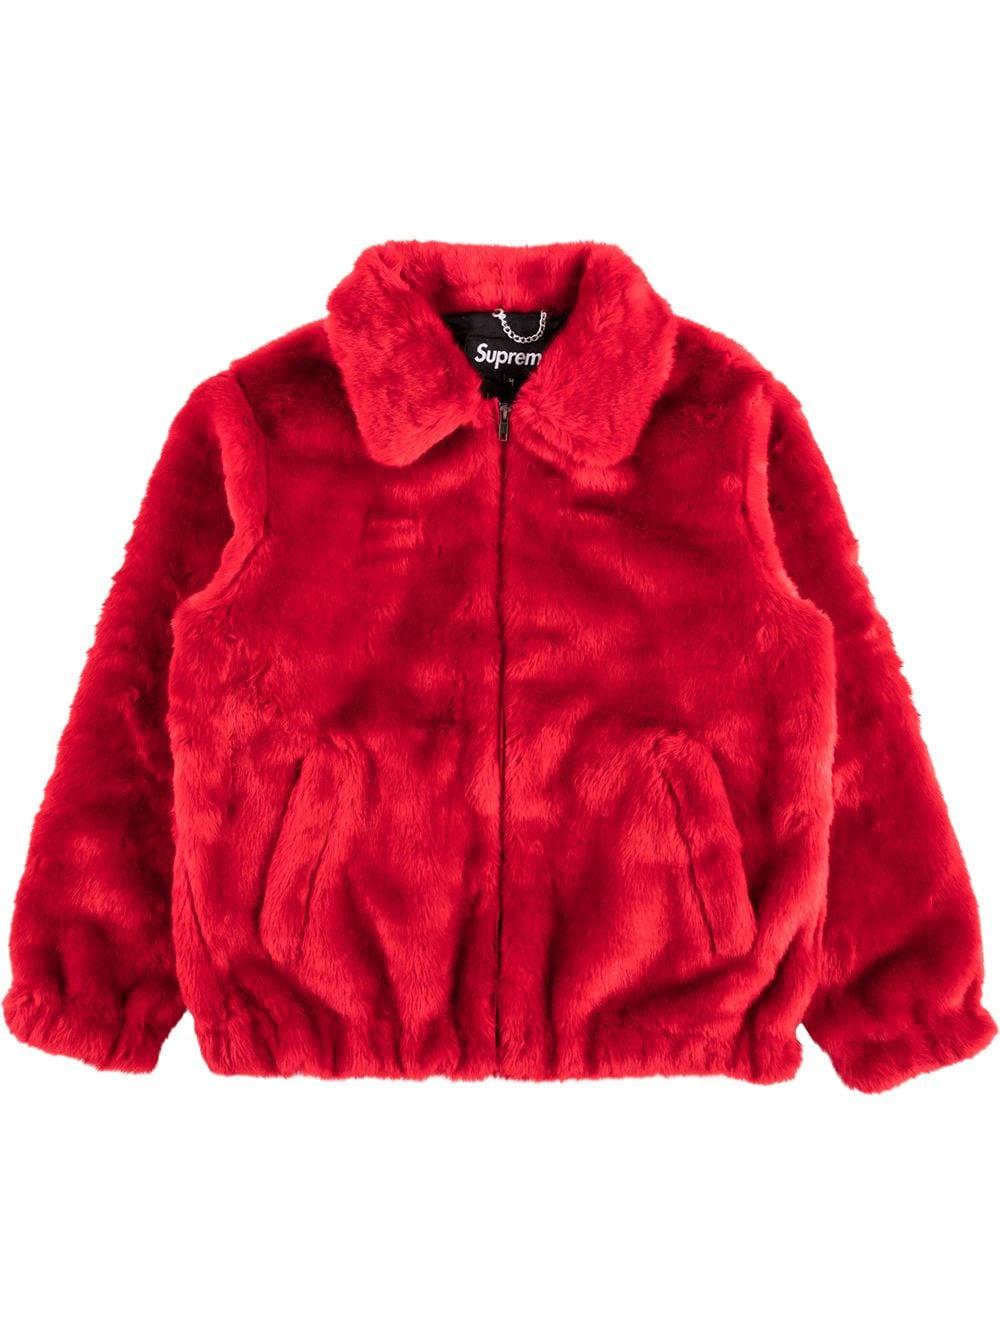 Supreme Supreme Faux Fur Bomber Jacket in Red for Men | Lyst